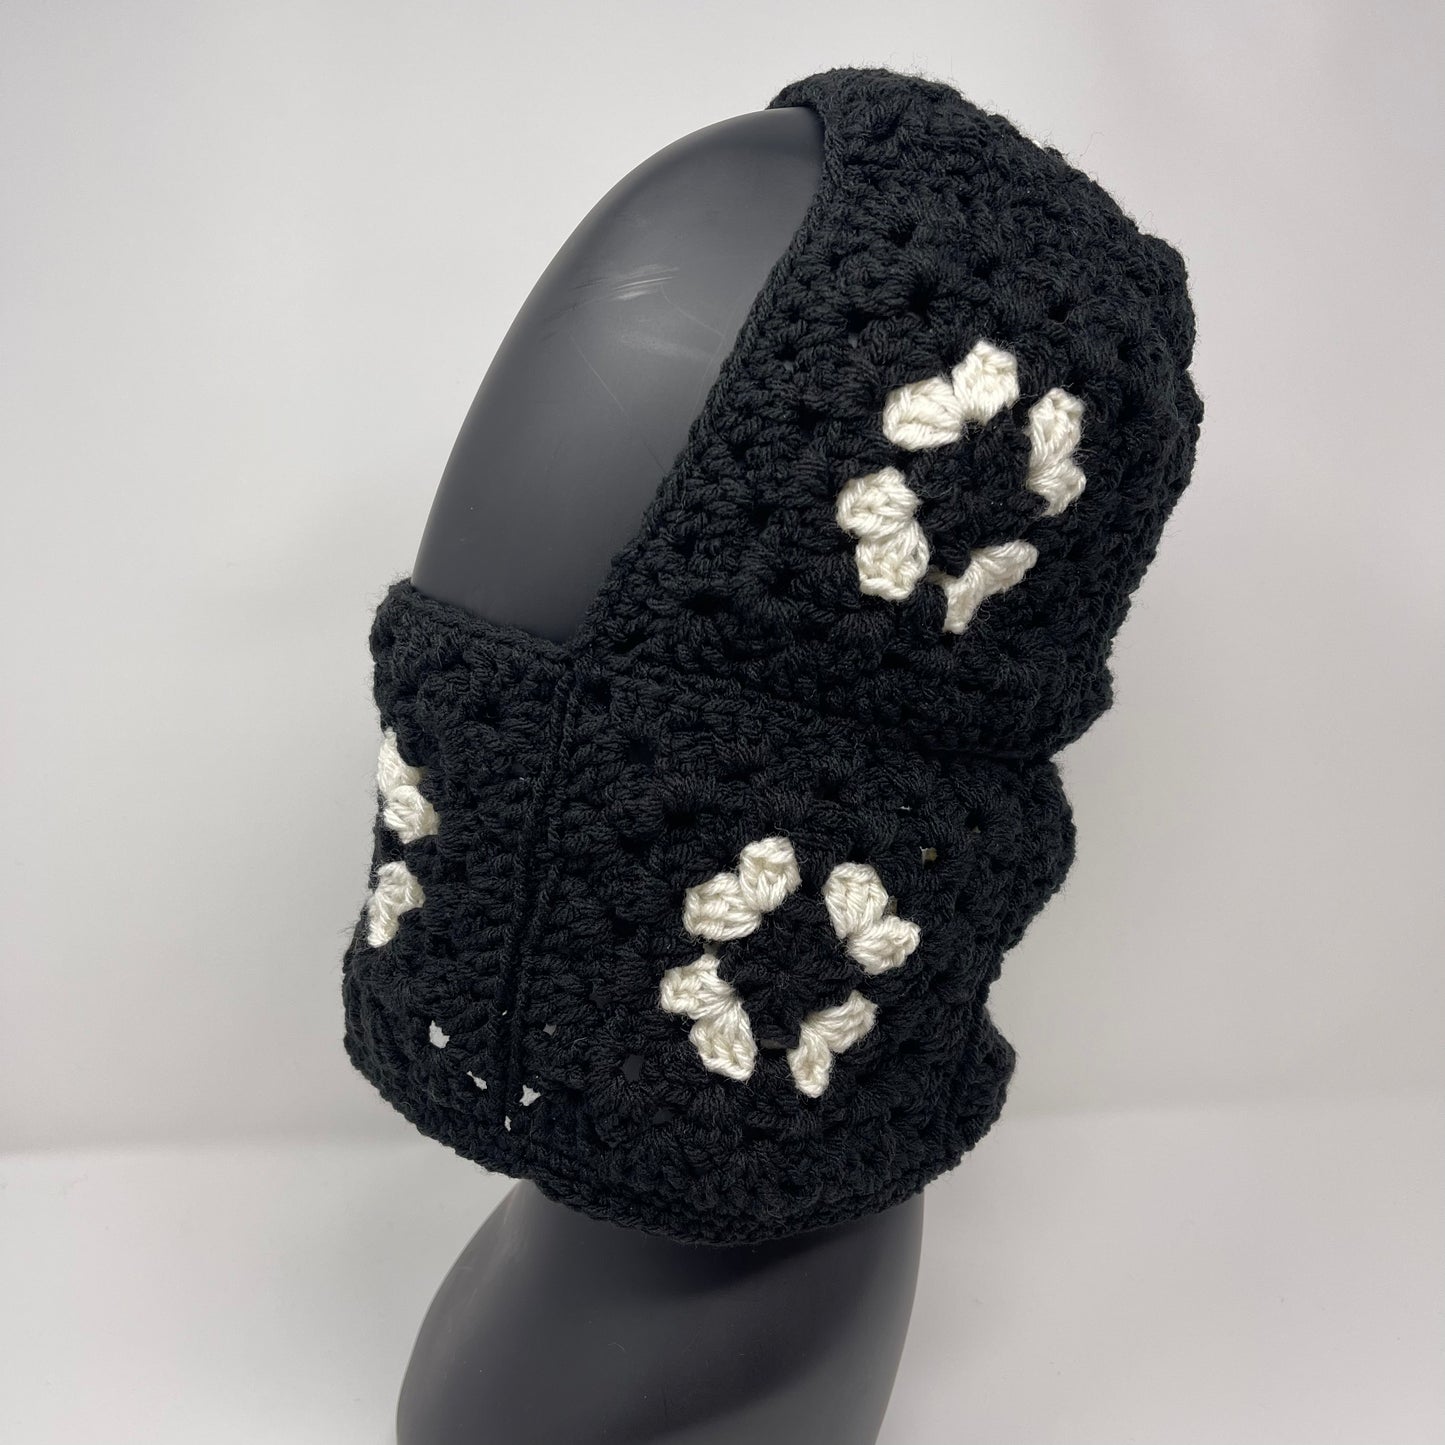 Crochet Balaclava - Black with White Flowers